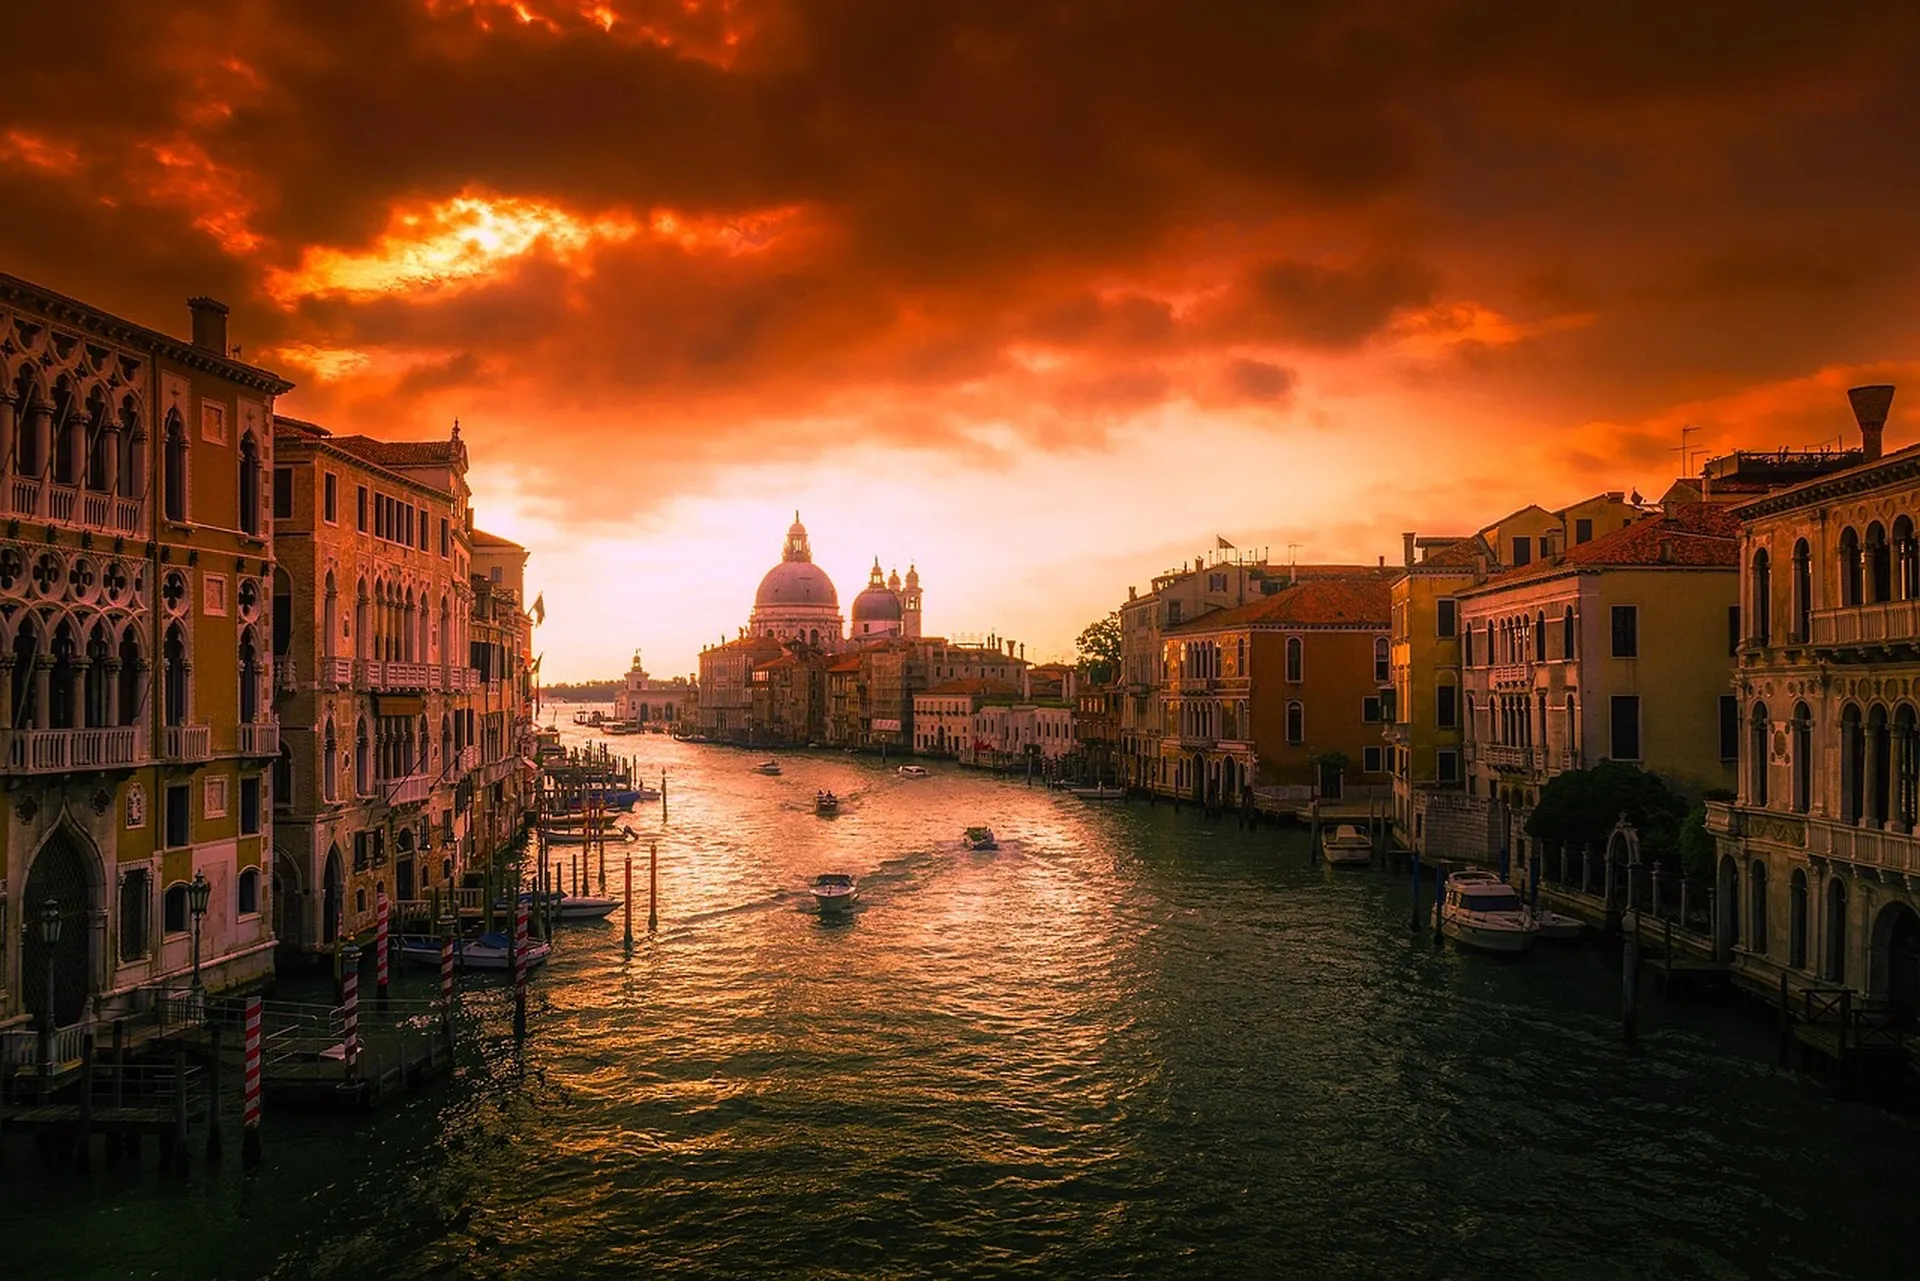 Explore Venice